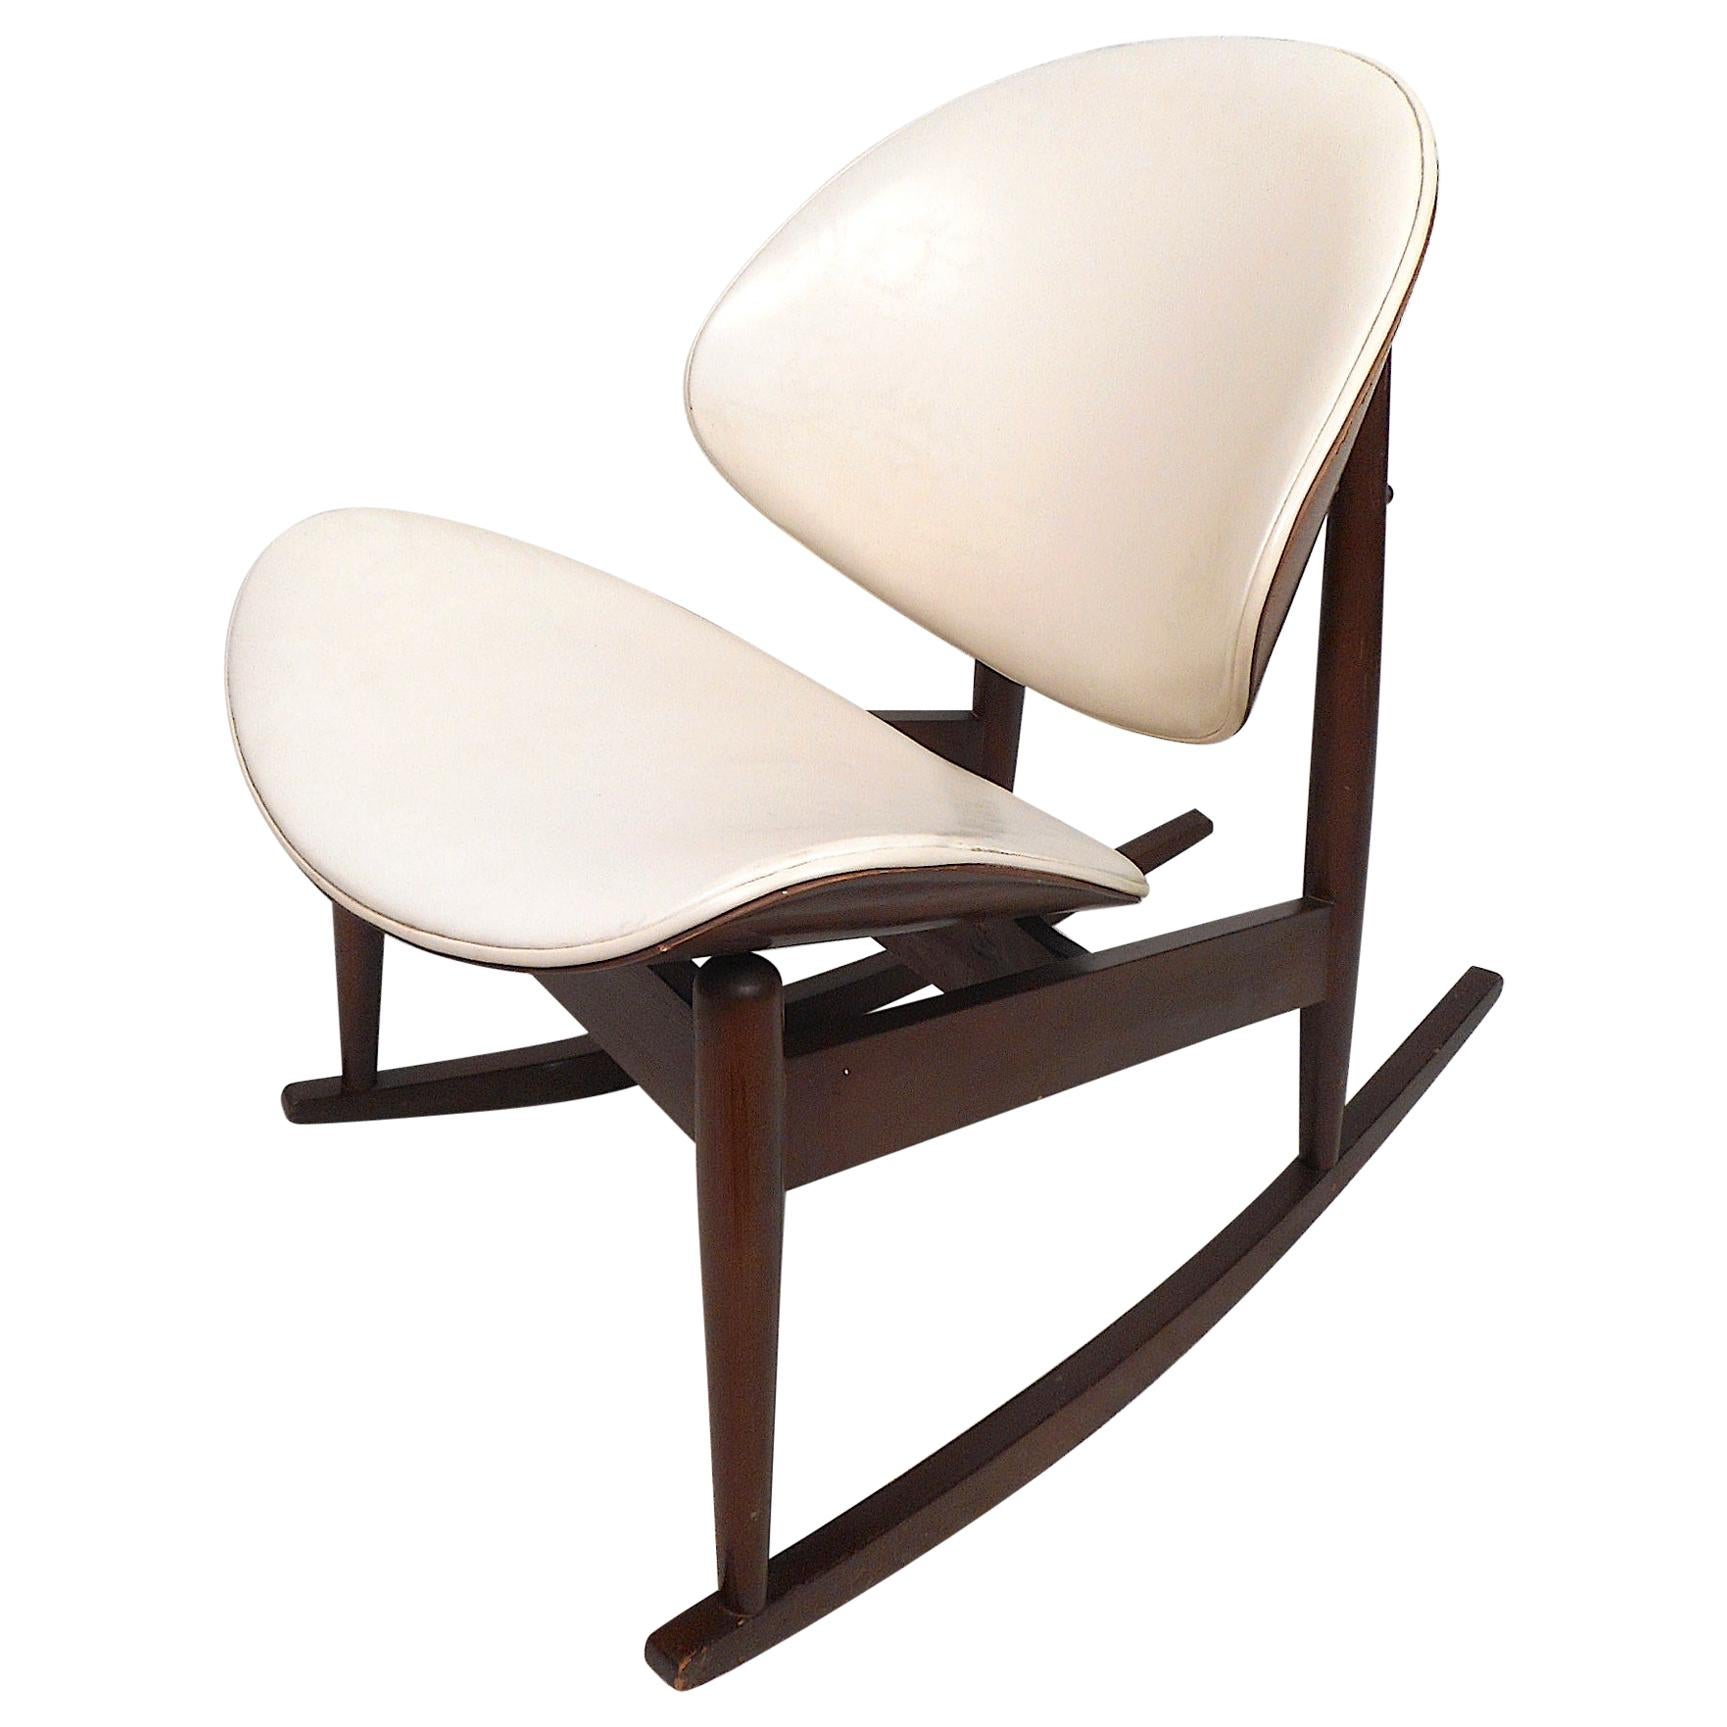 Midcentury Rocking Chair by Kodawood Furniture